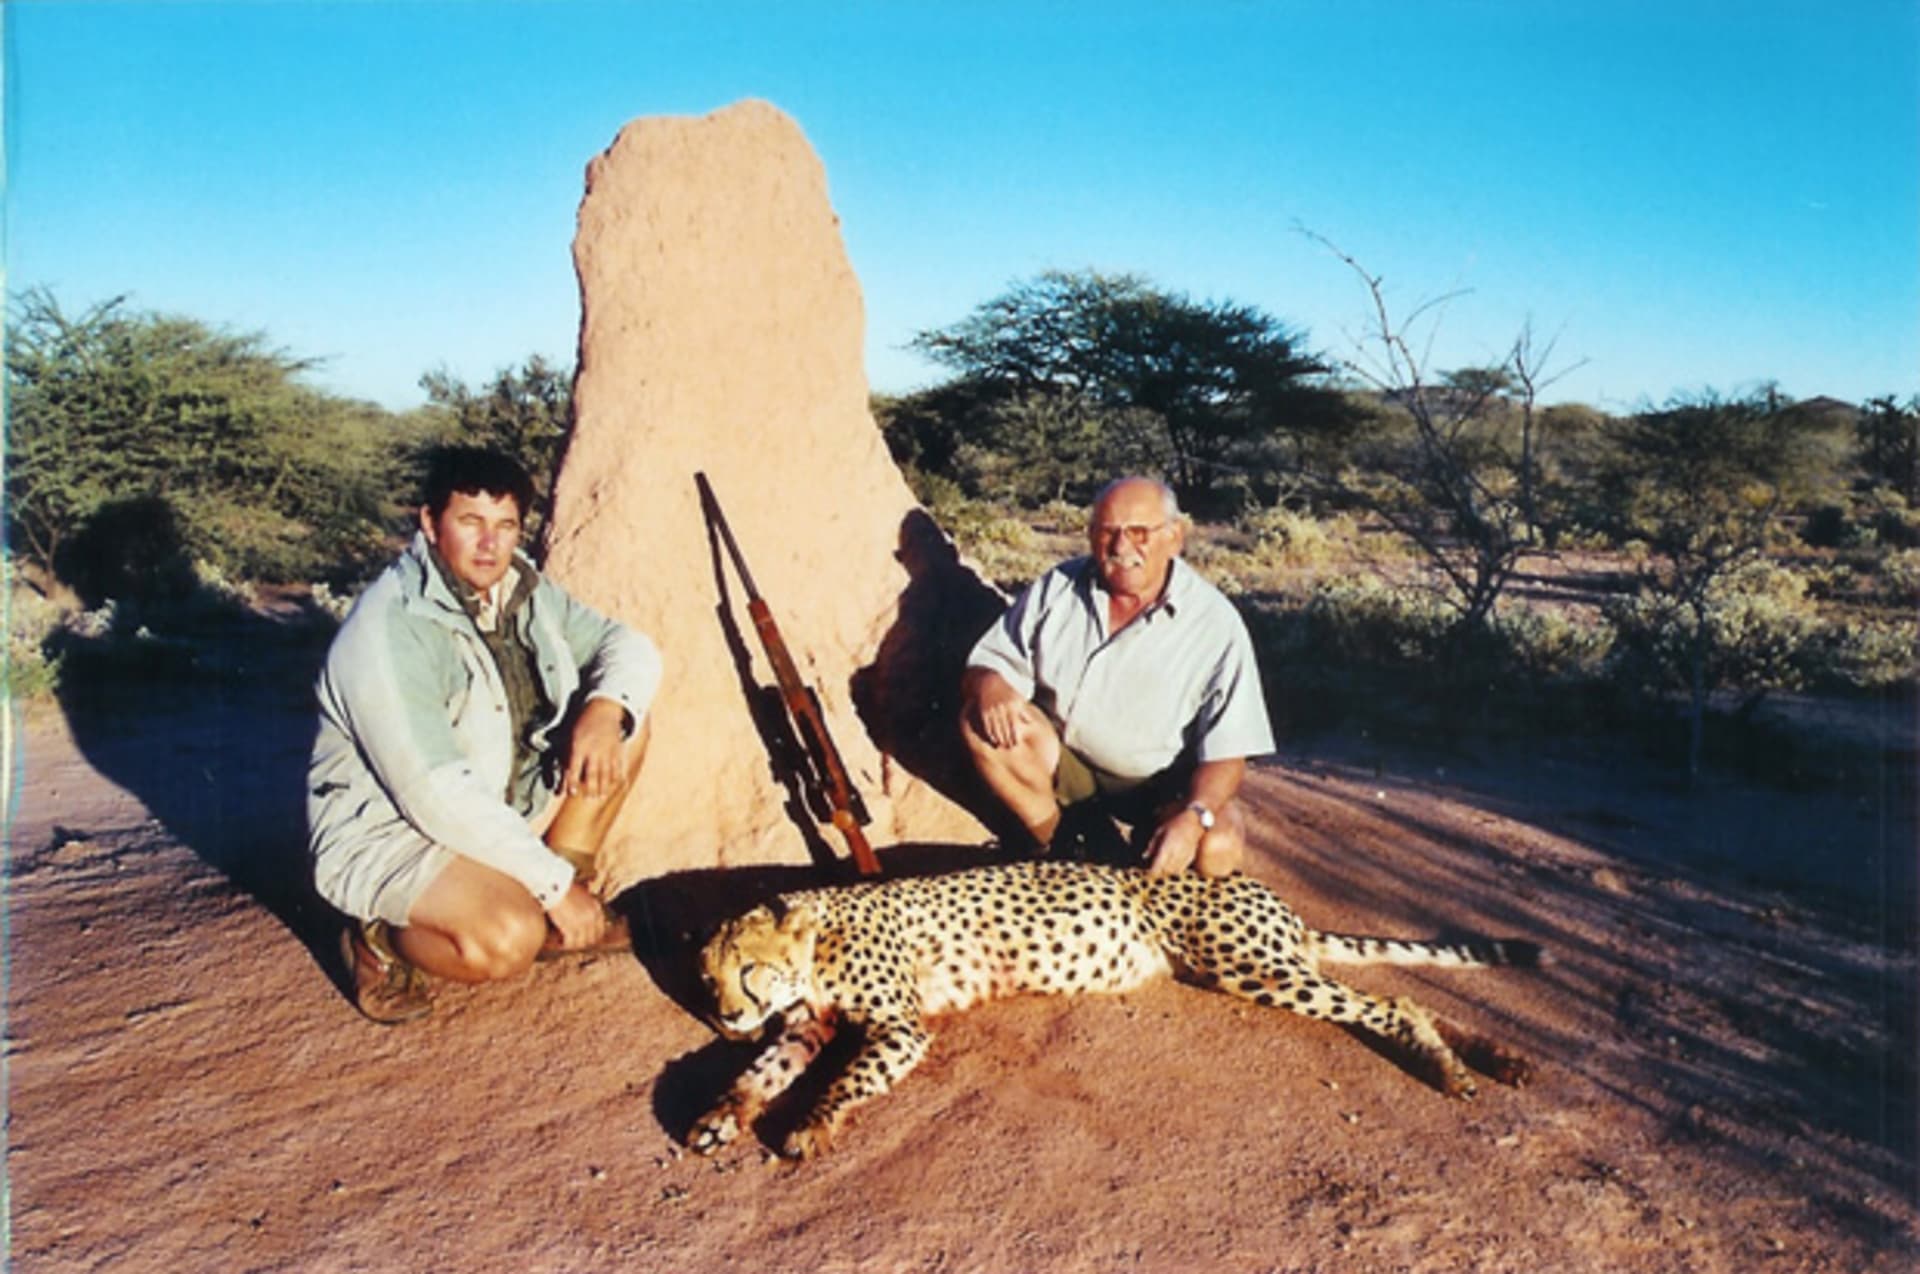 Zastřelený gepard